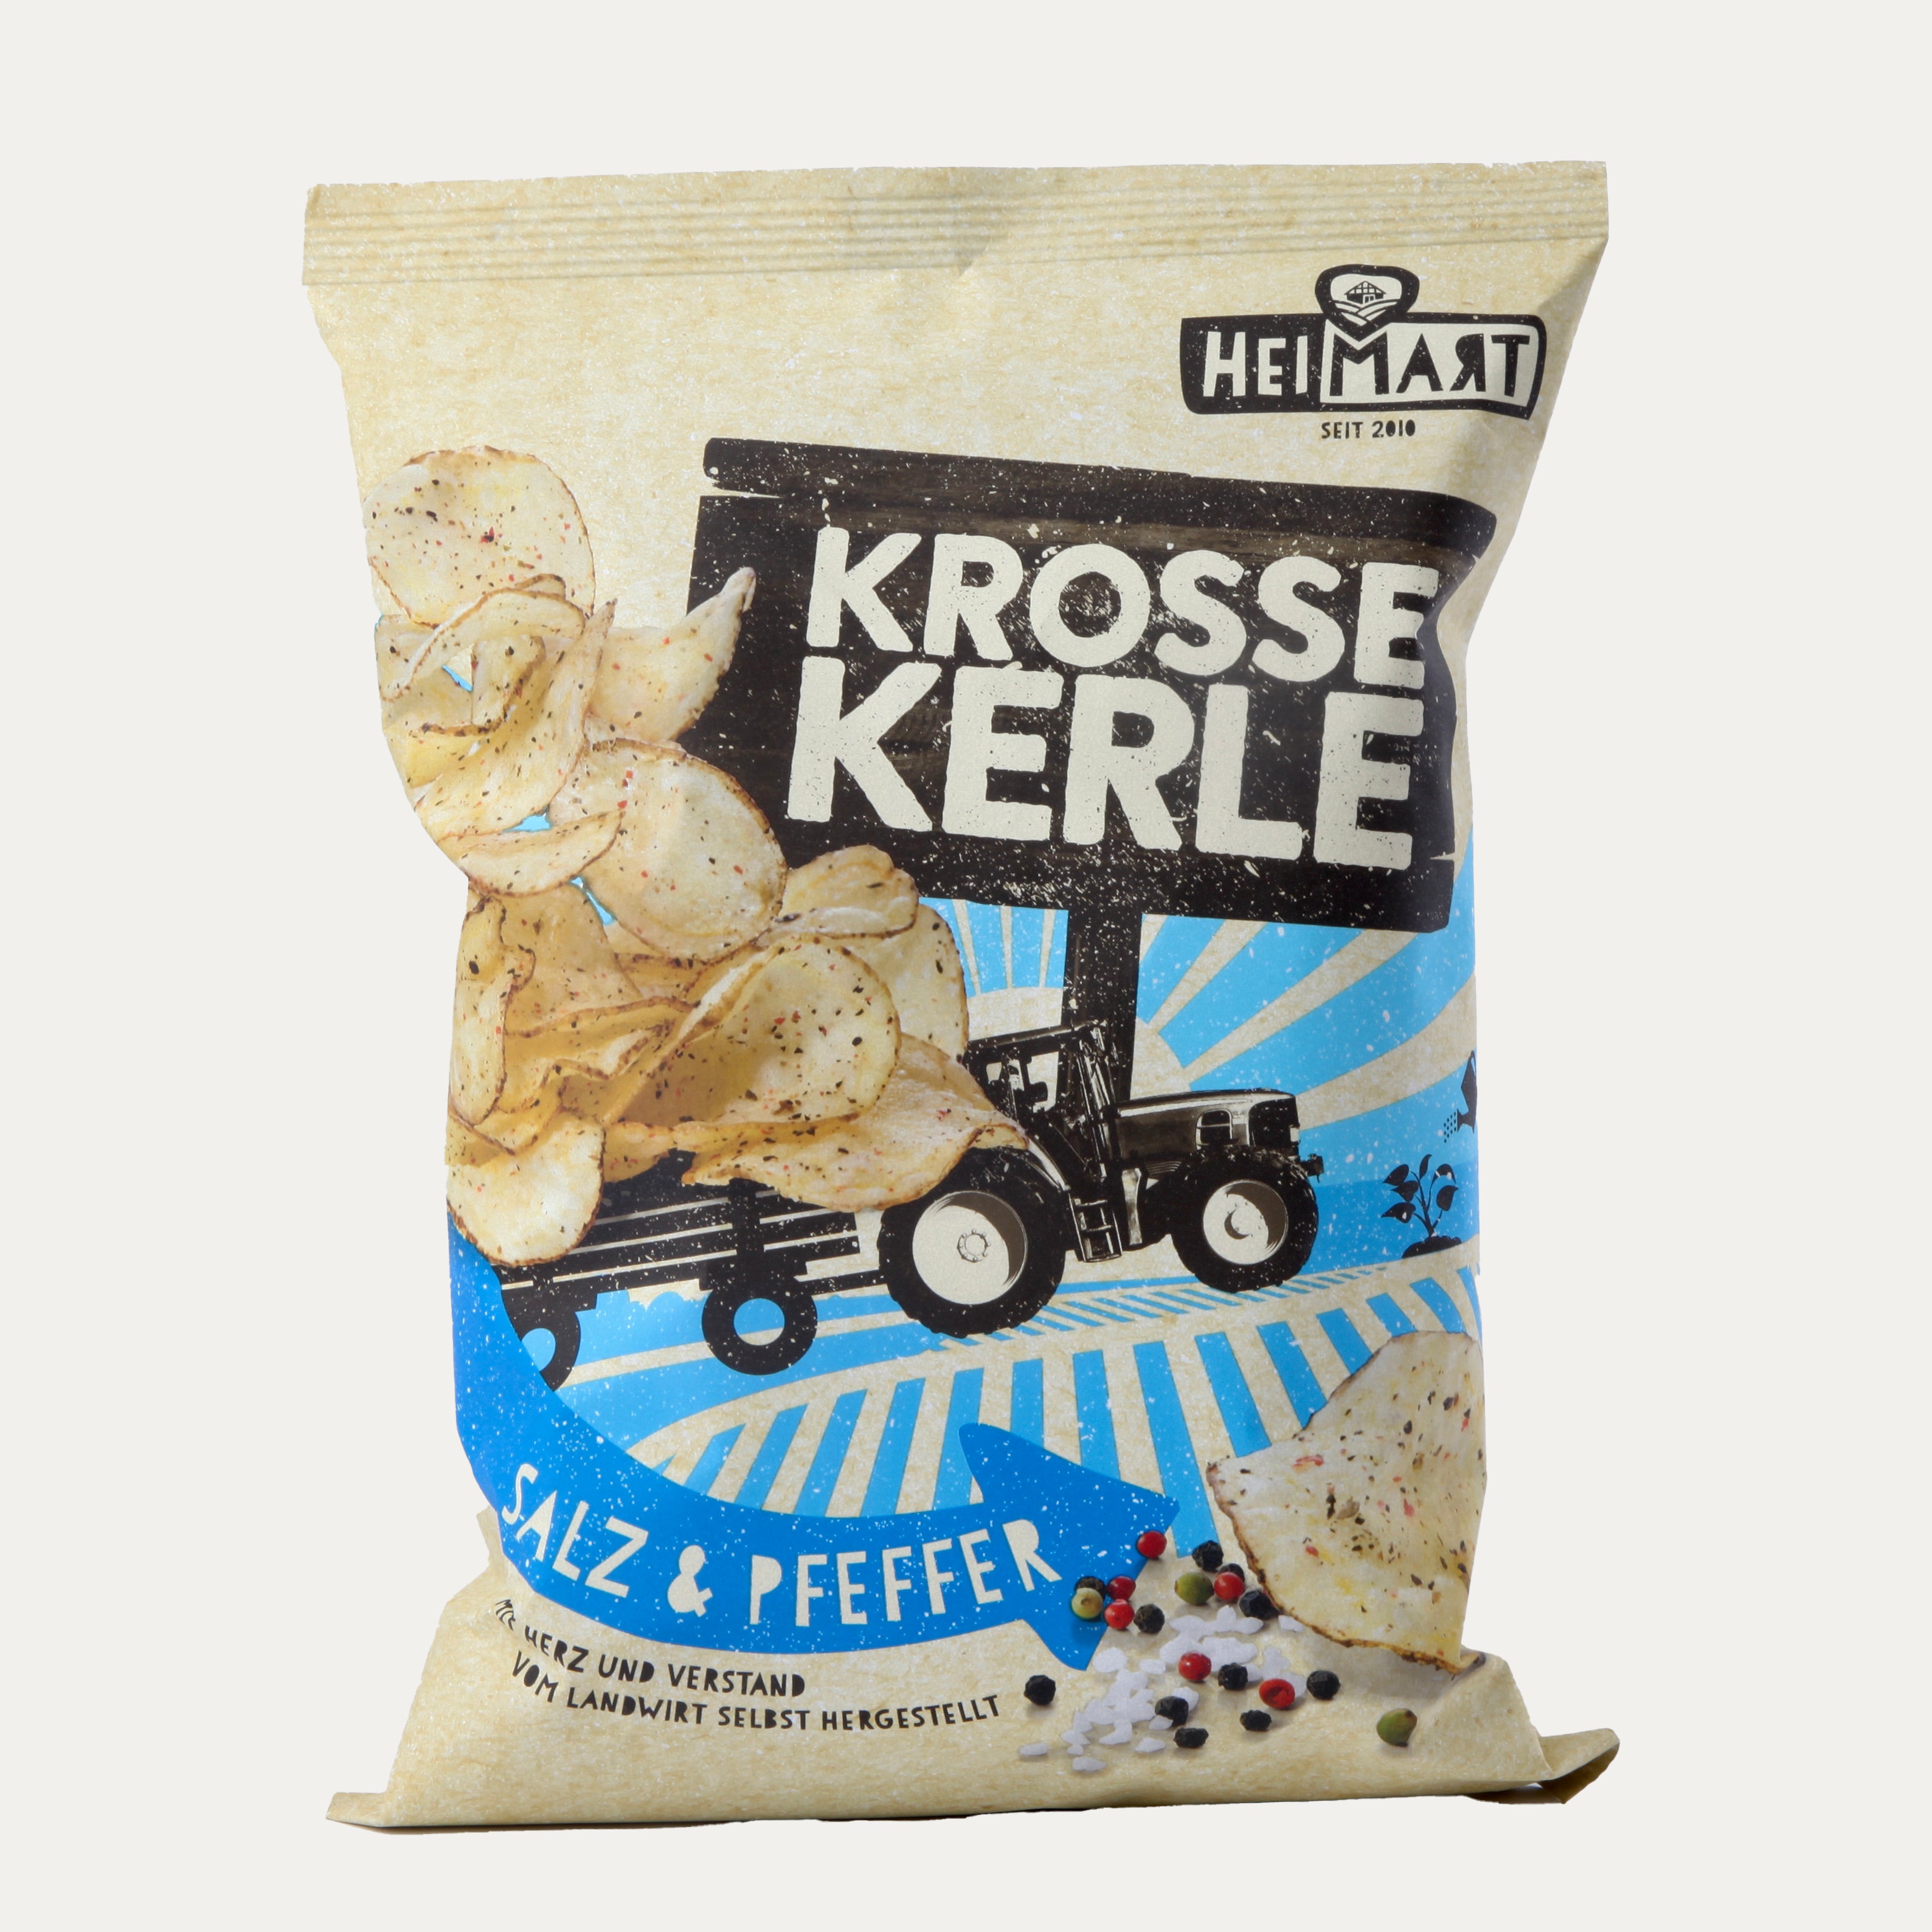 Krosse Kerle - Kartoffelchips Karamel & Salz – Chips 115g